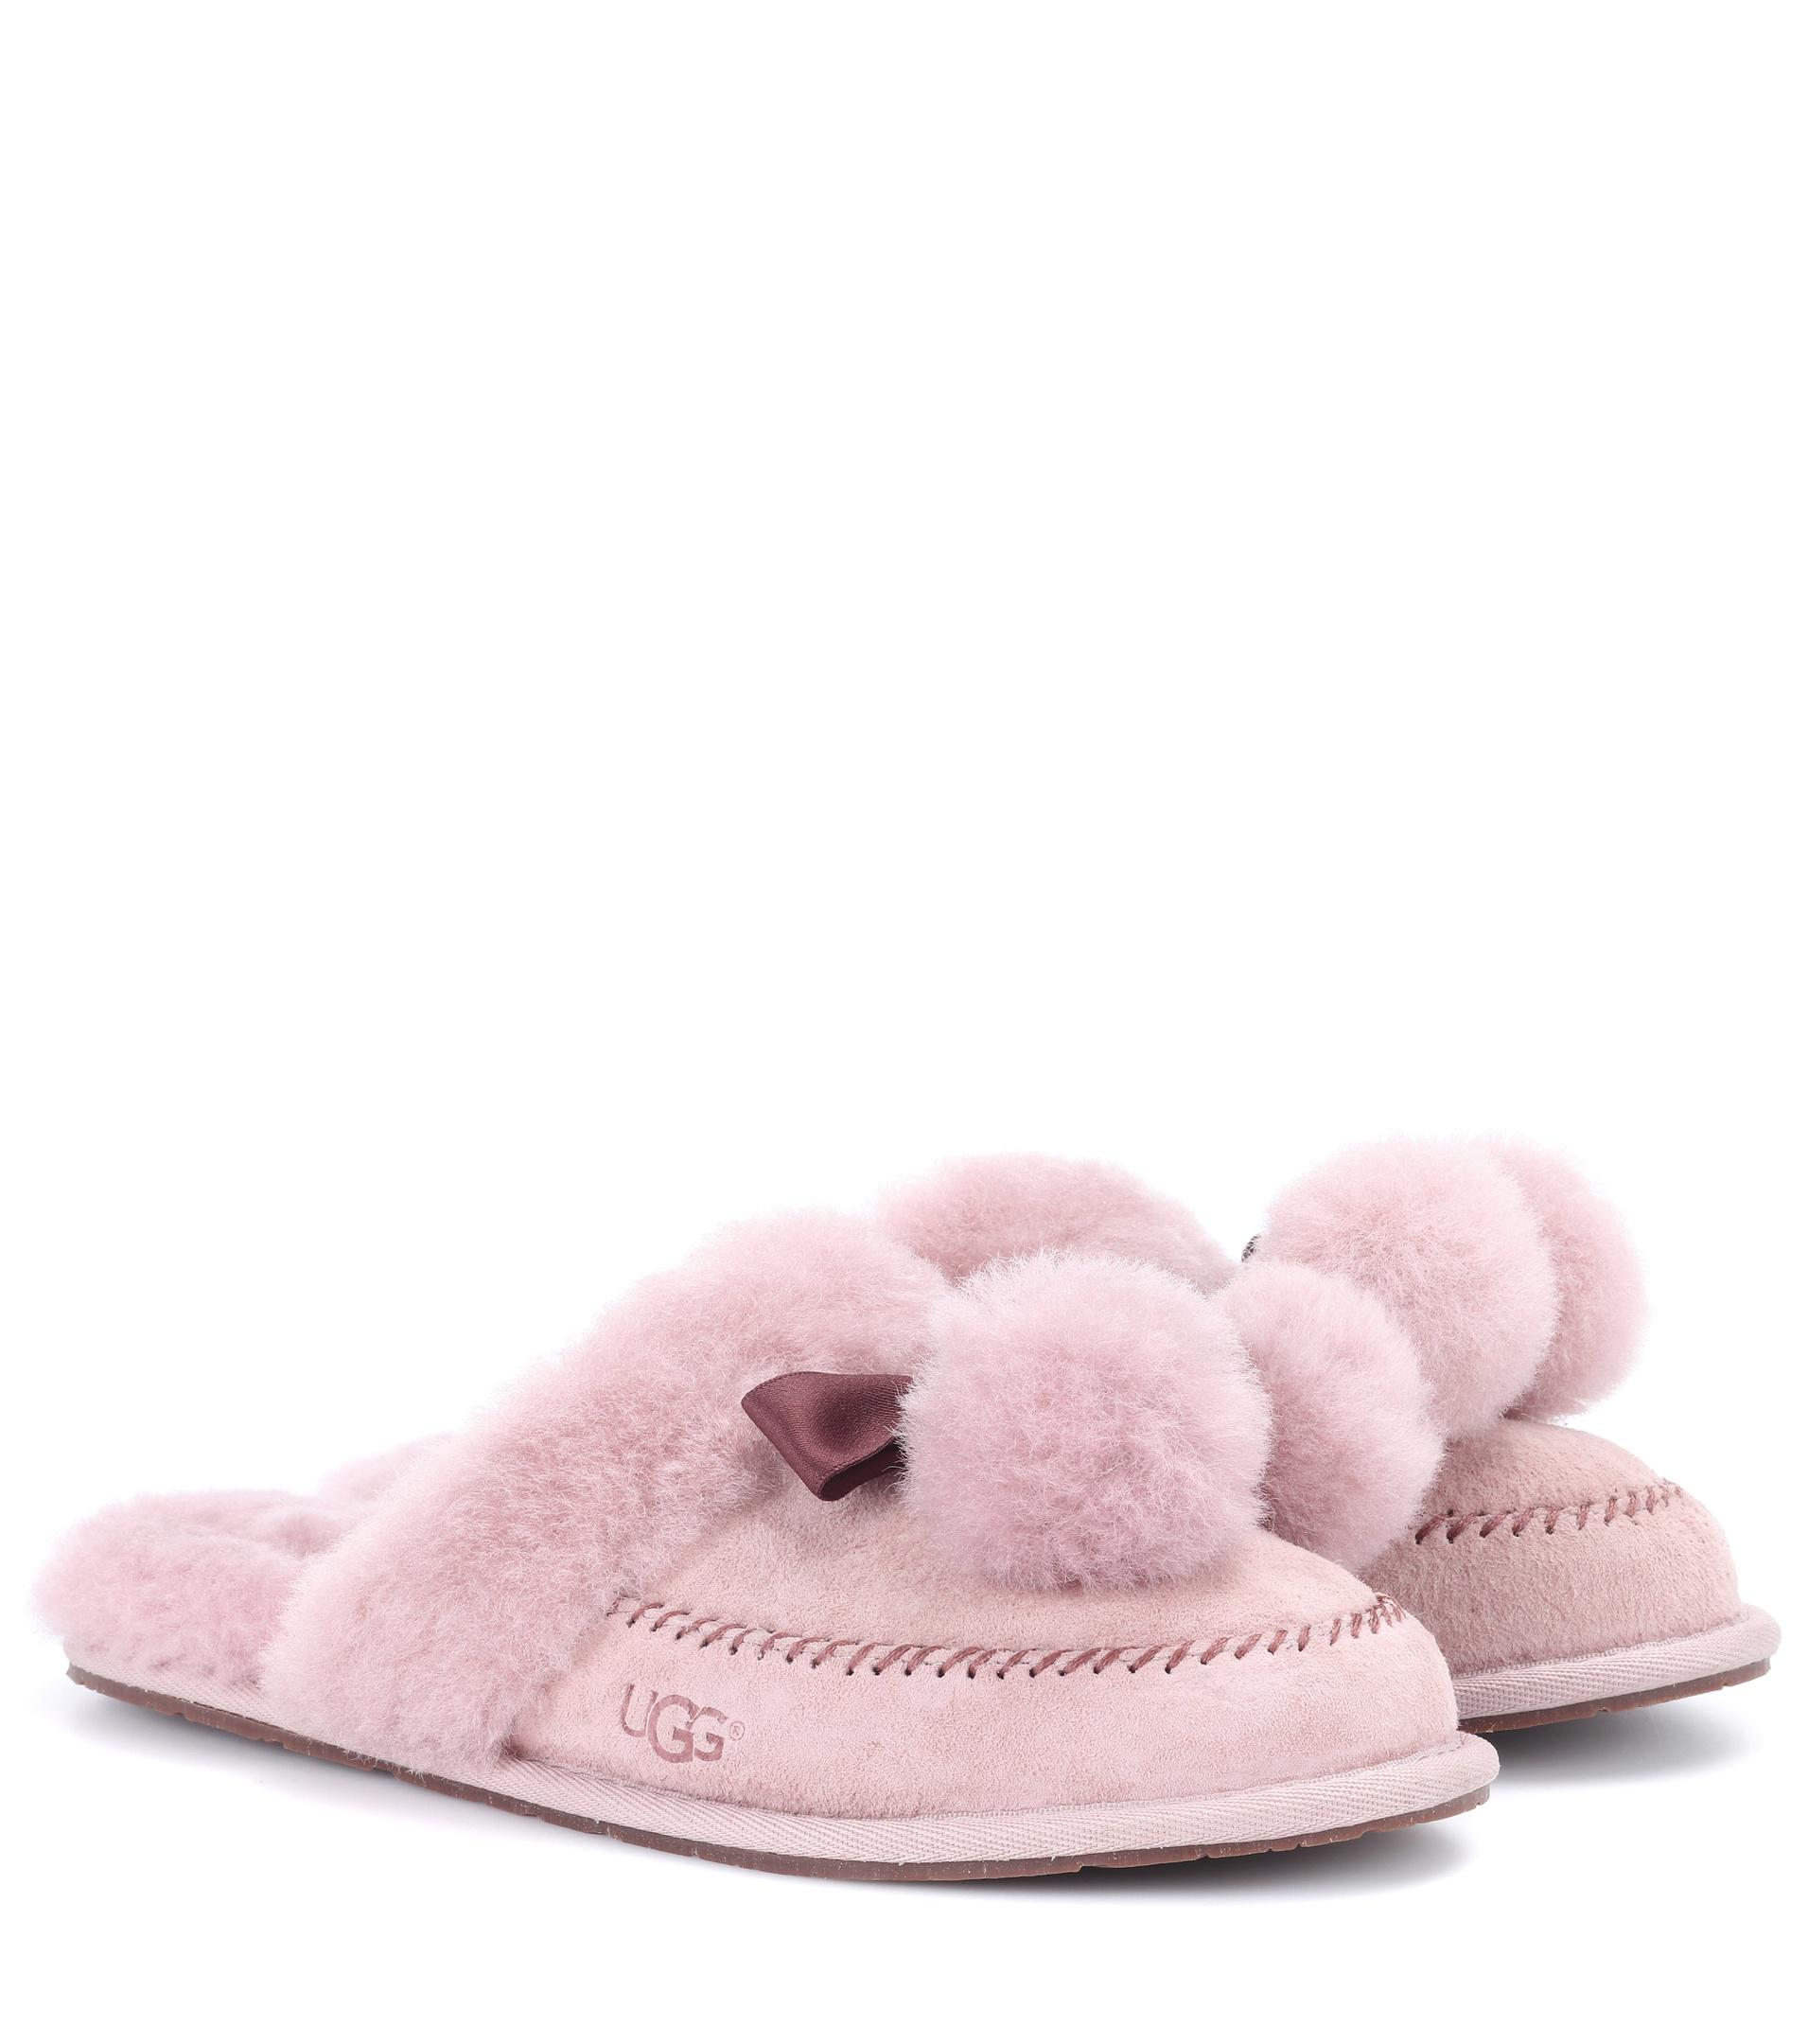 ugg pom pom slippers pink